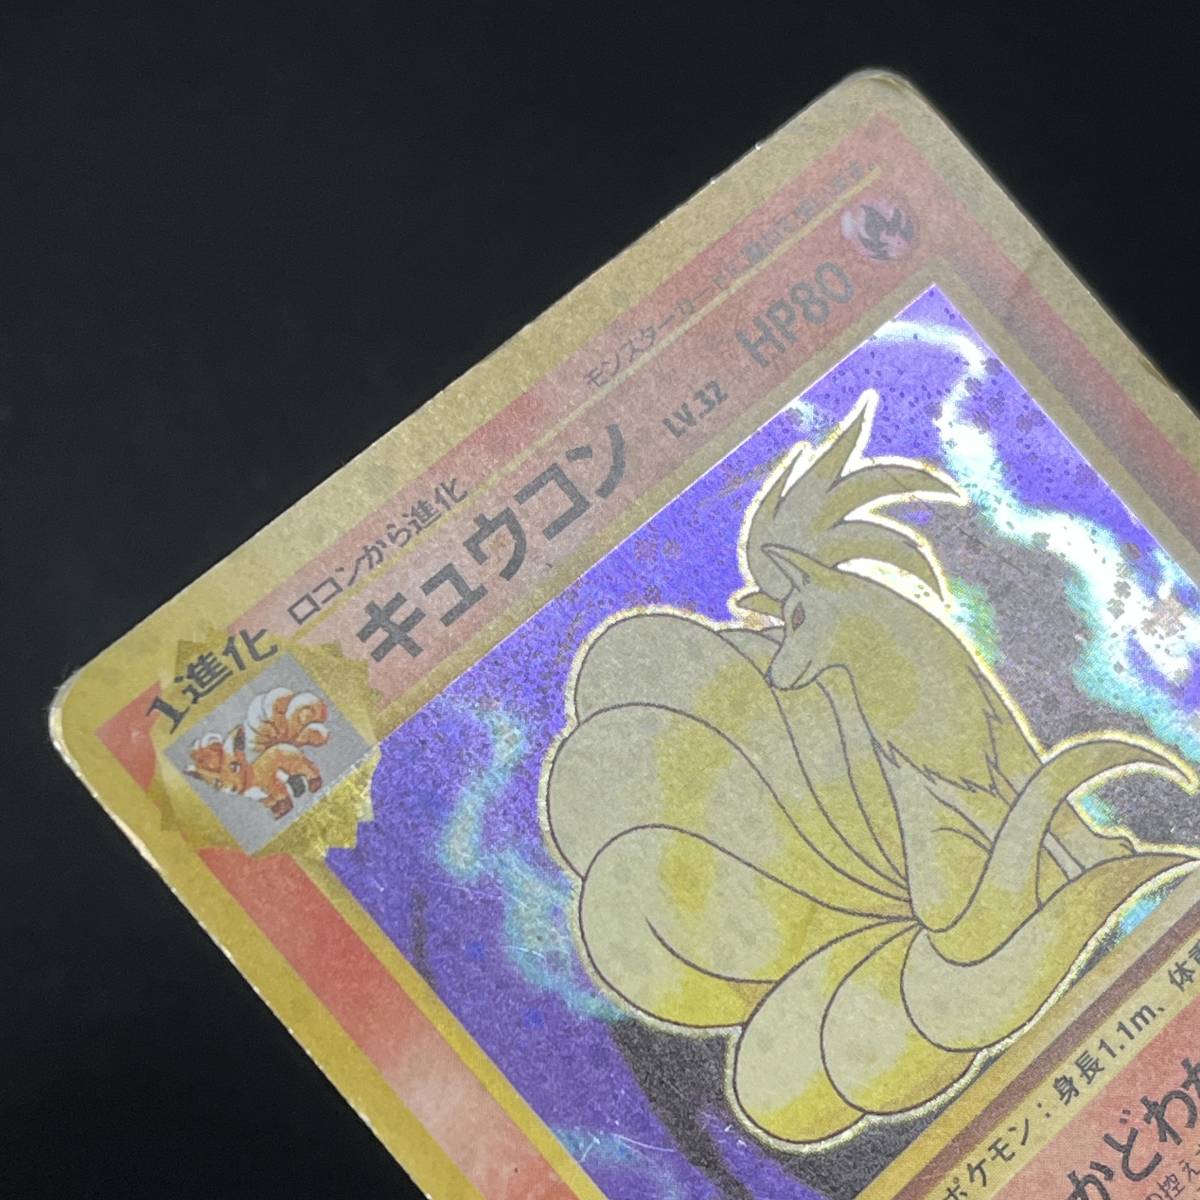 Ninetales No. 036 Base Set Holo Pokemon Card Japanese ポケモン カード キュウコン 旧裏 ポケカ 230530-2_画像6